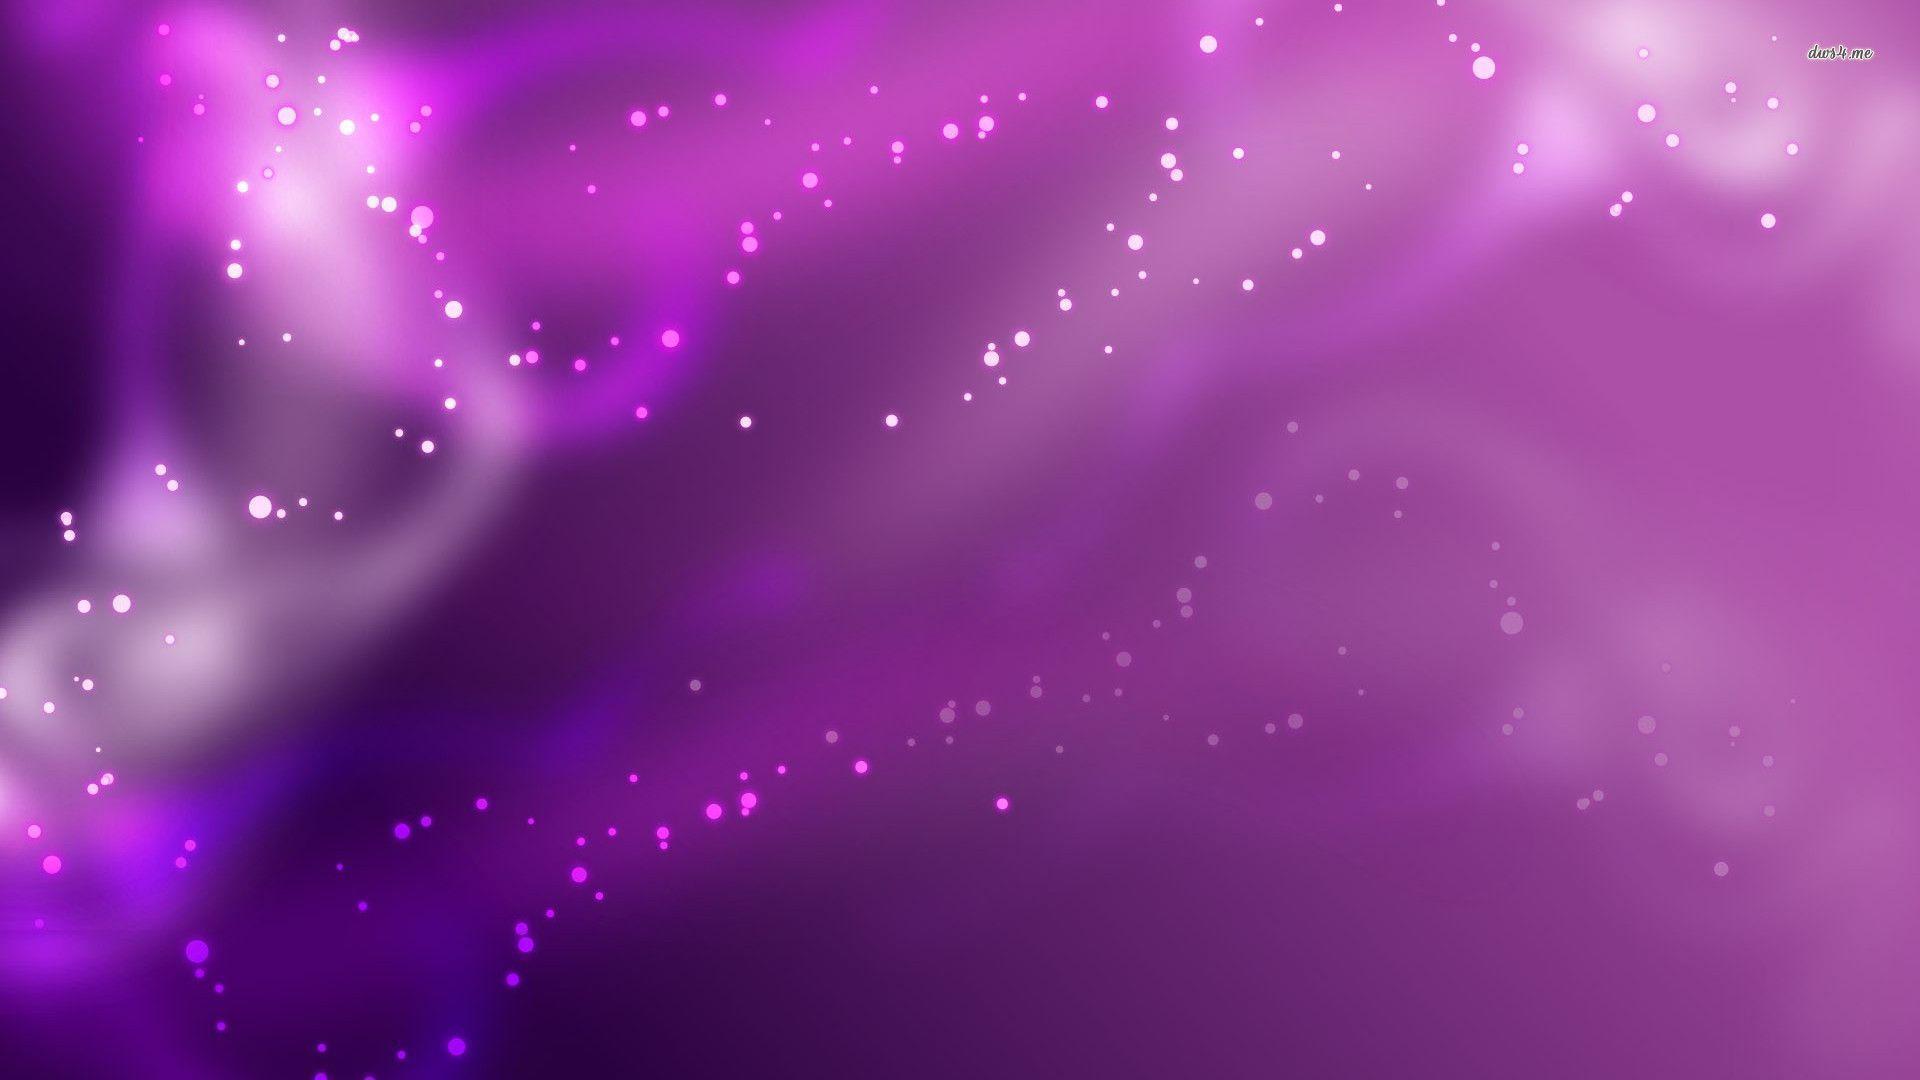 Light Purple Wallpaper Pattern. More Information With Light Purple